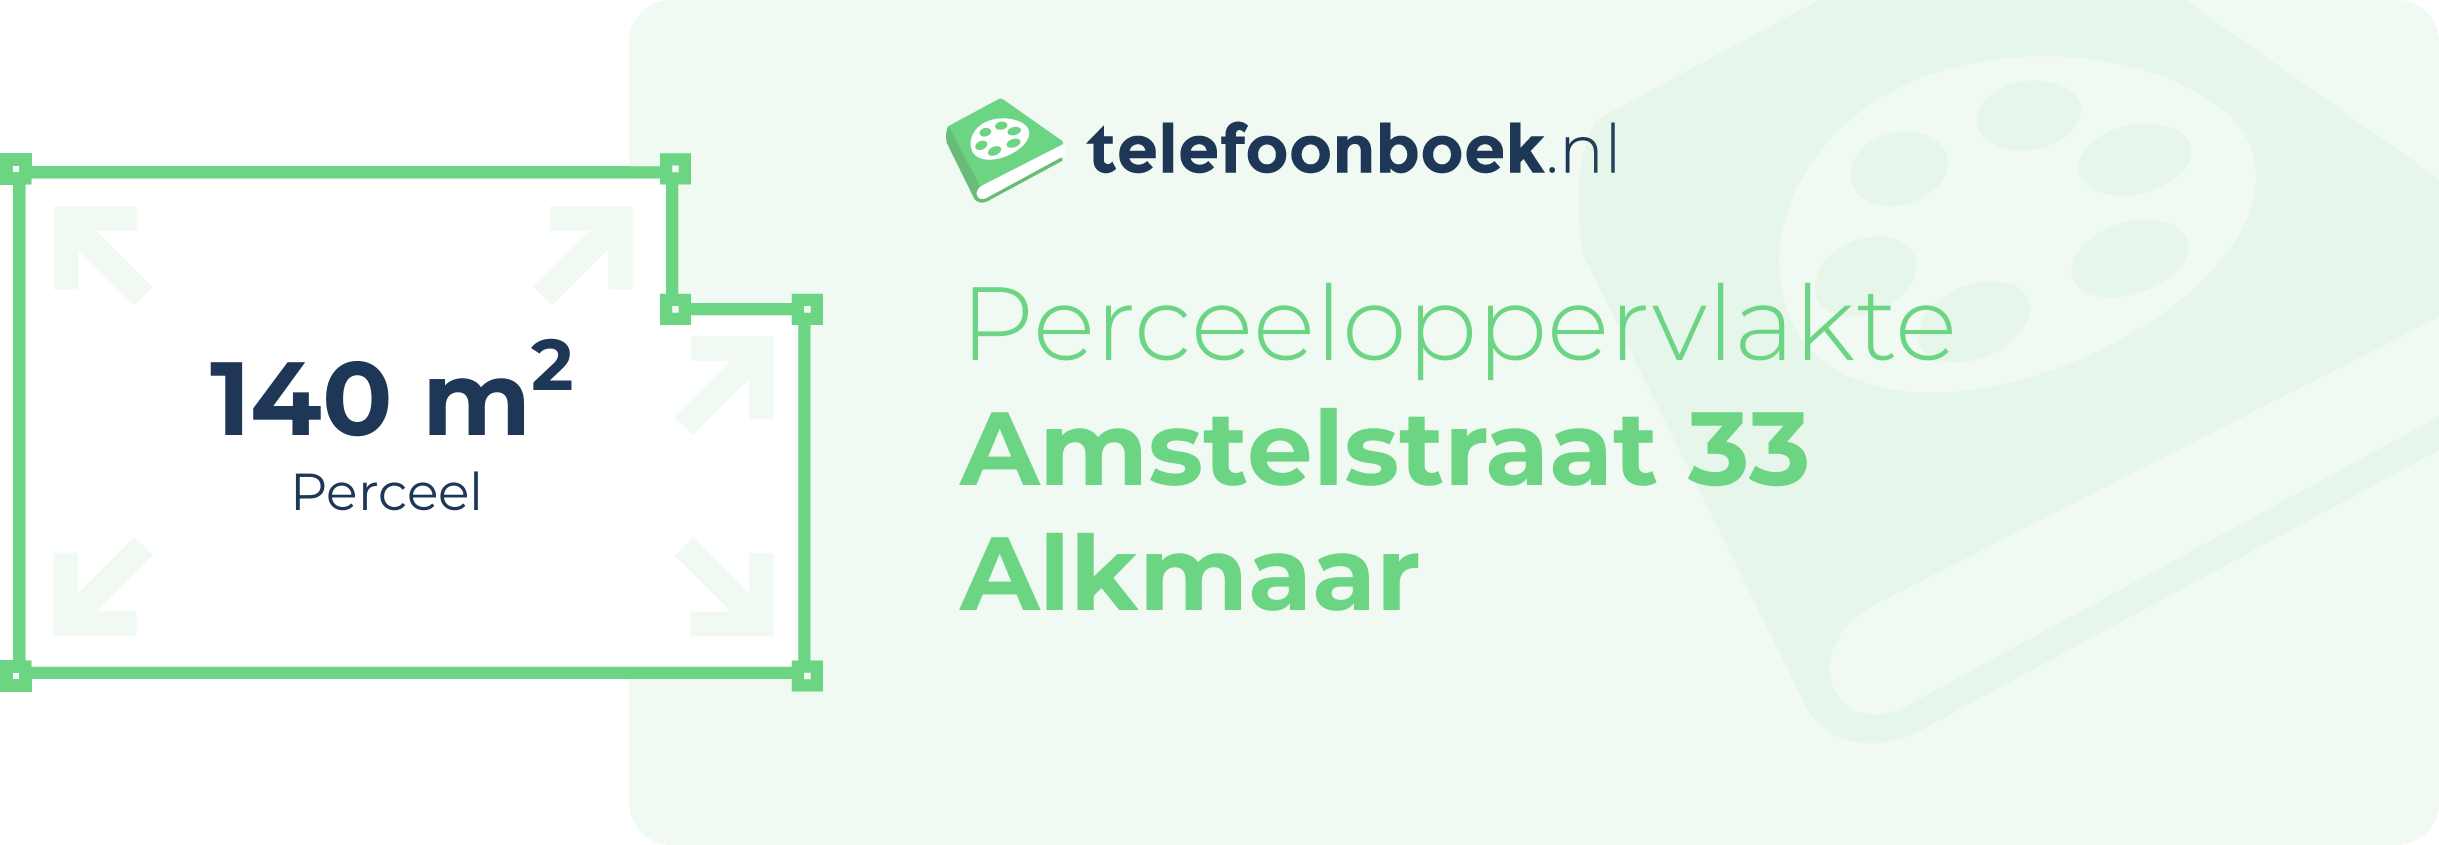 Perceeloppervlakte Amstelstraat 33 Alkmaar